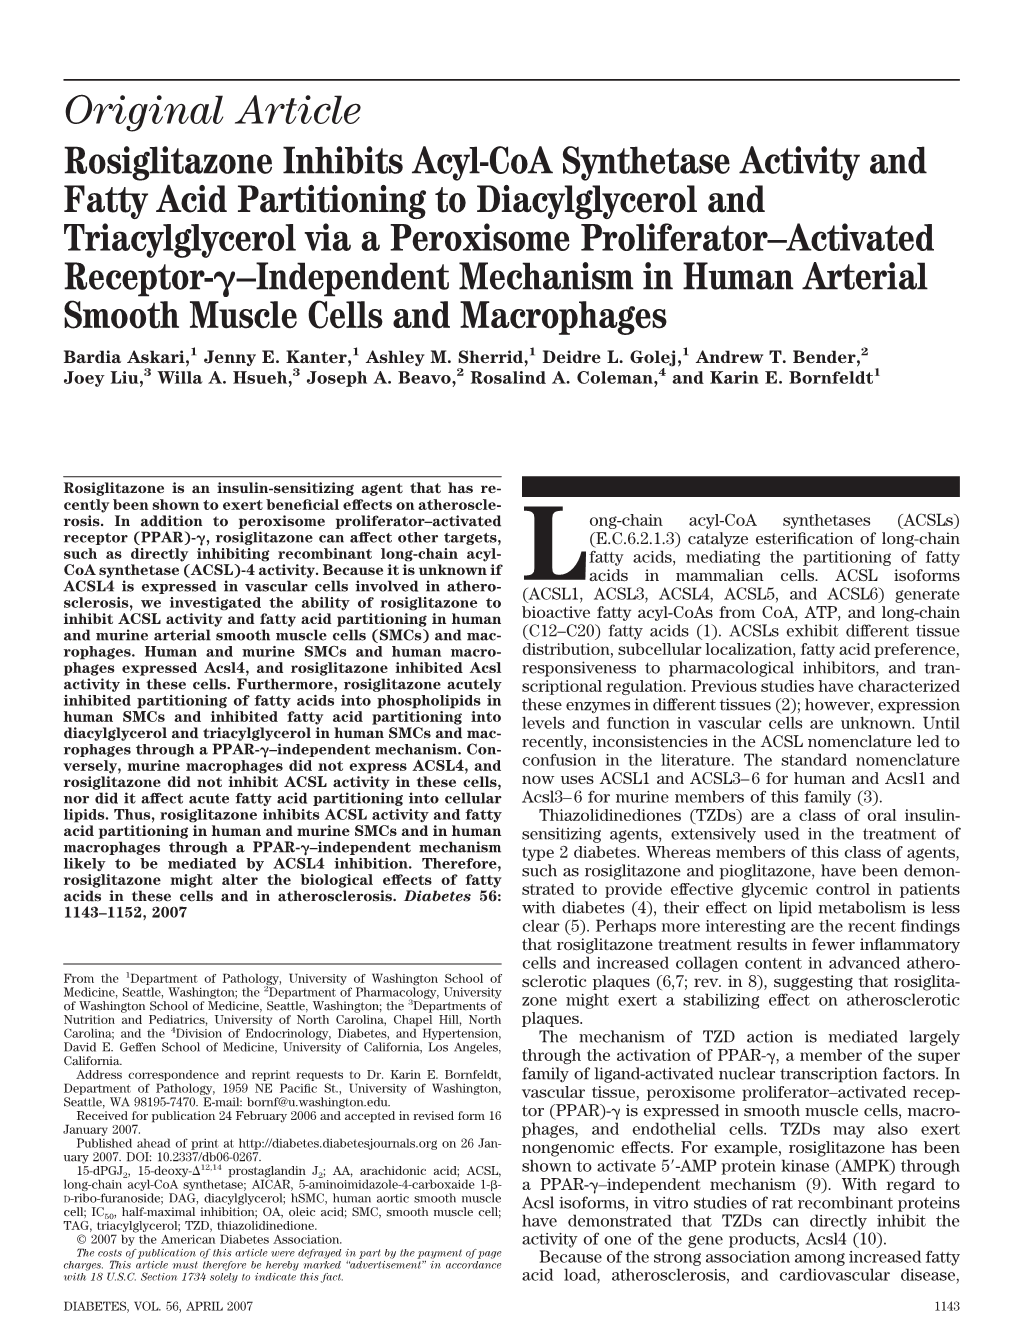 Original Article Rosiglitazone Inhibits Acyl-Coa Synthetase Activity and Fatty Acid